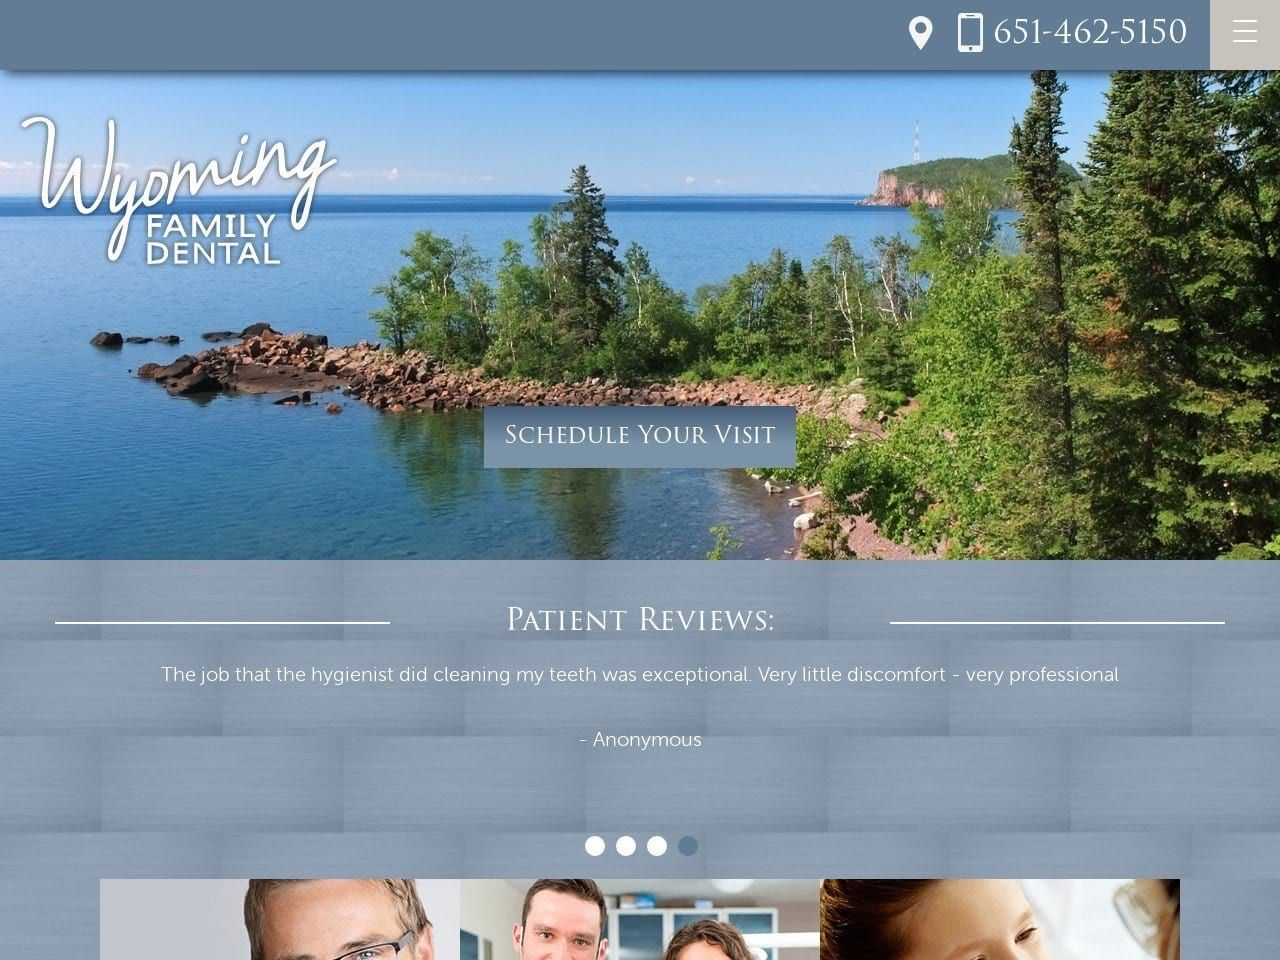 Wyoming Family Dental Website Screenshot from wyomingfamilydental.com